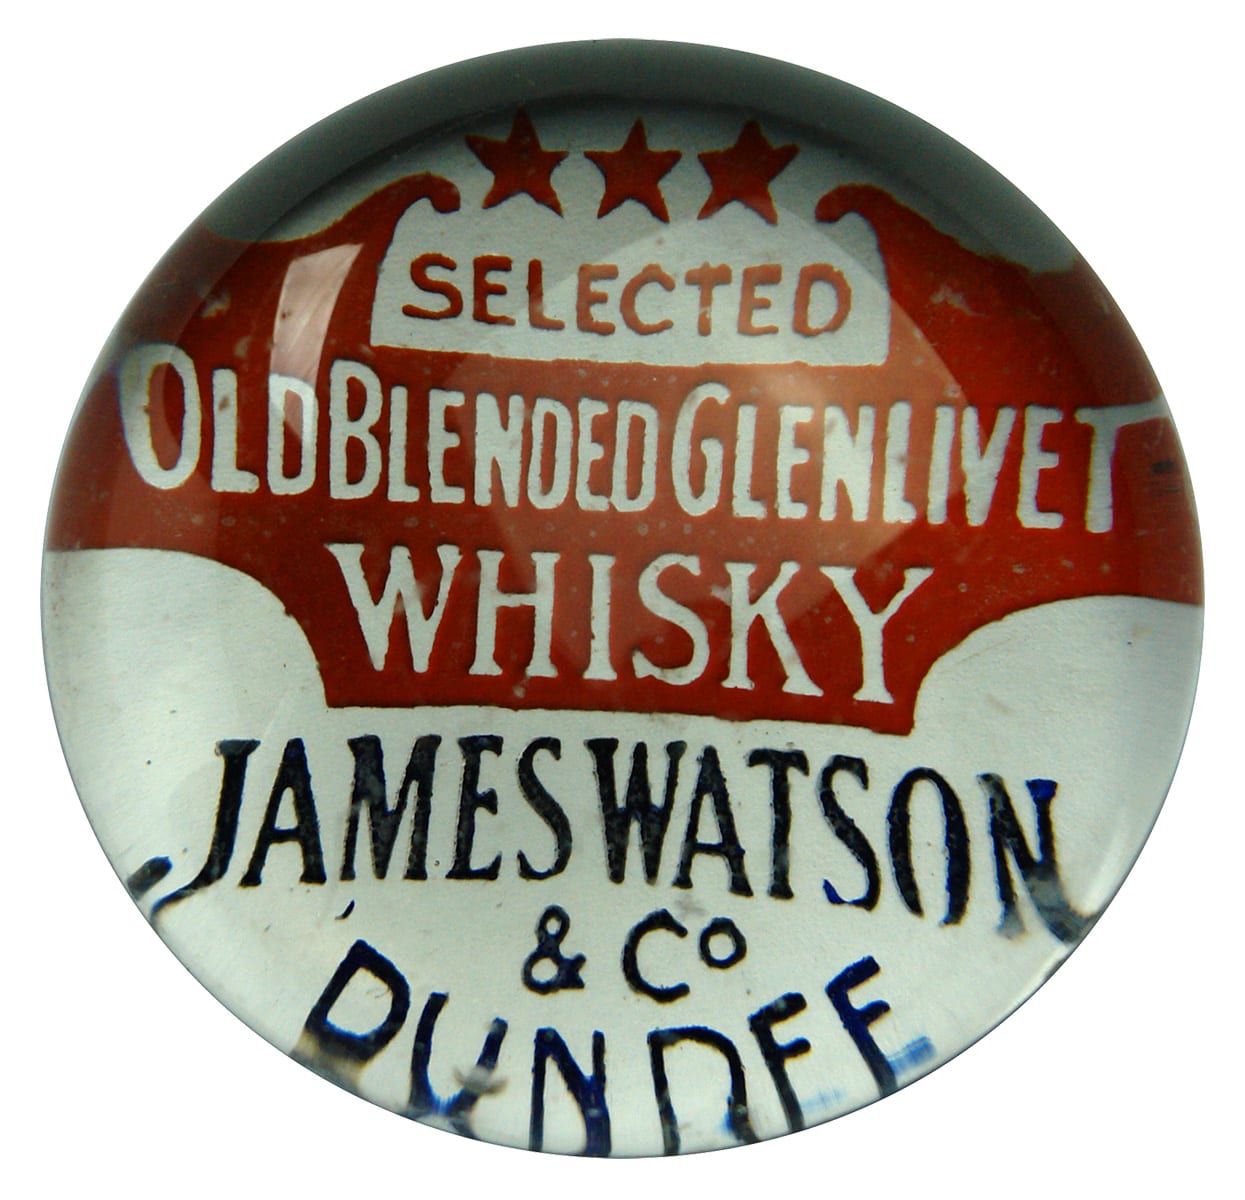 James Watson Glenlivet Whisky Paperweight